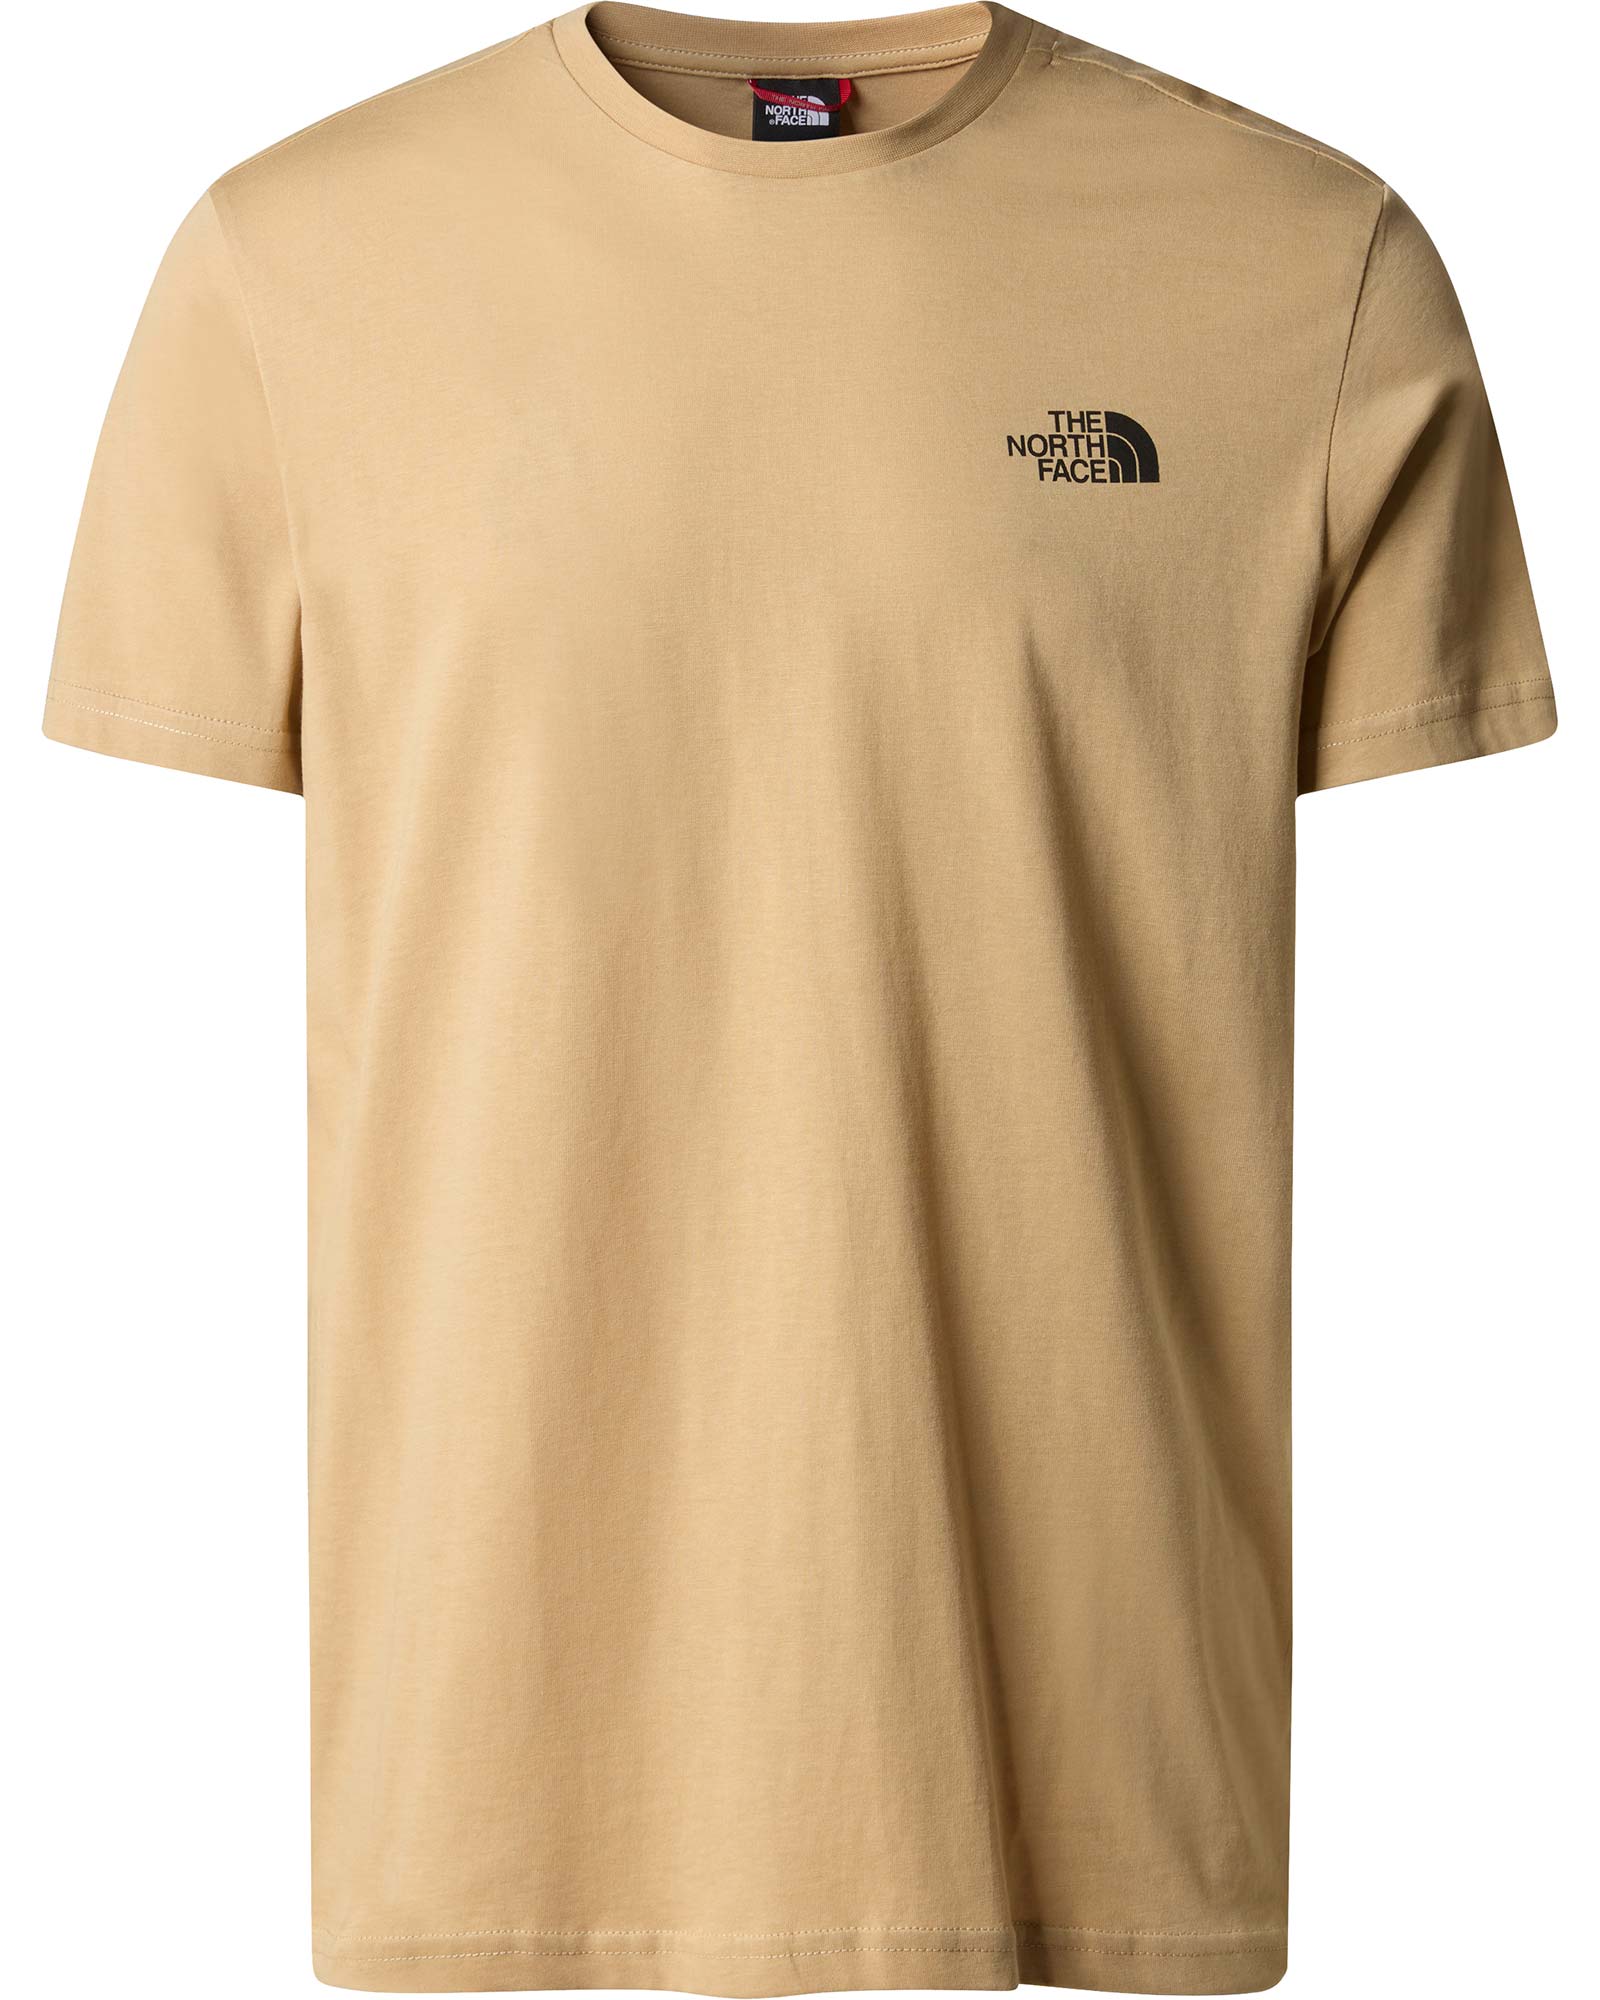 The North Face Simple Dome Men’s T Shirt - Khaki Stone S